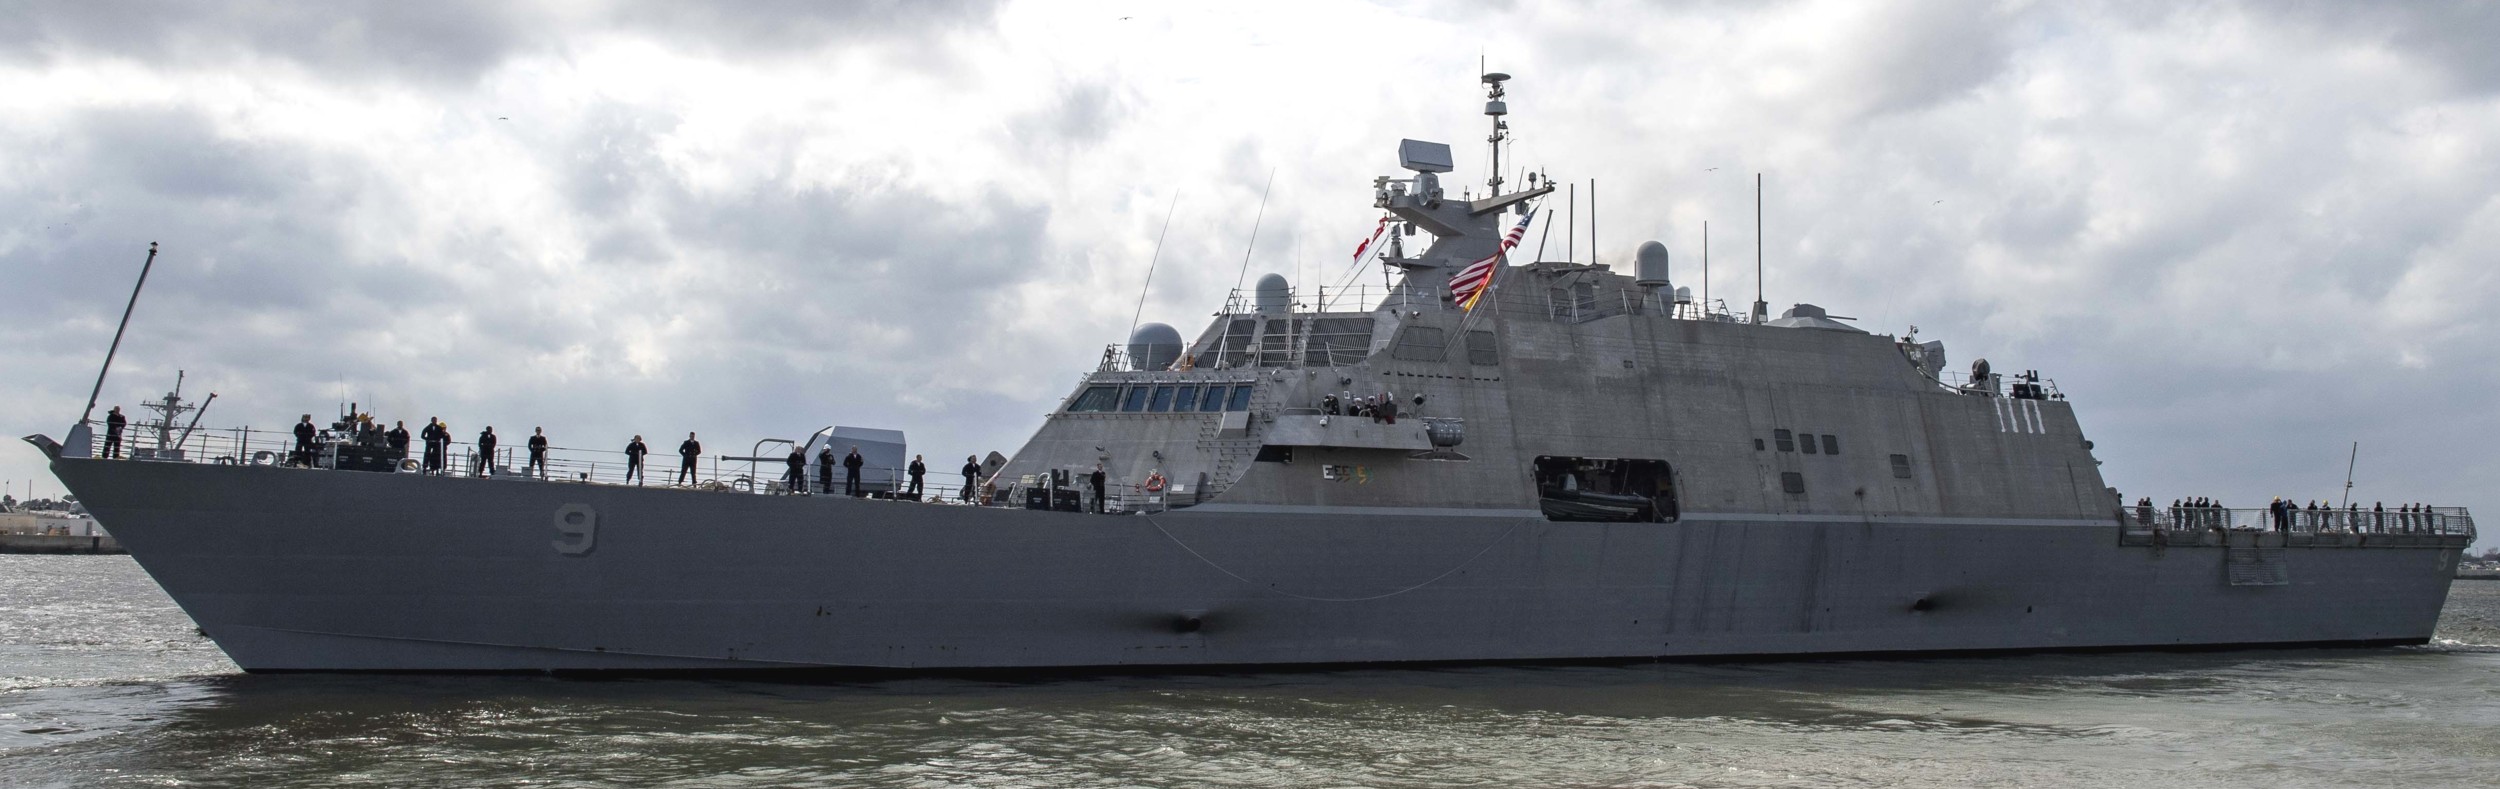 lcs-9 uss little rock freedom class littoral combat ship us navy 42